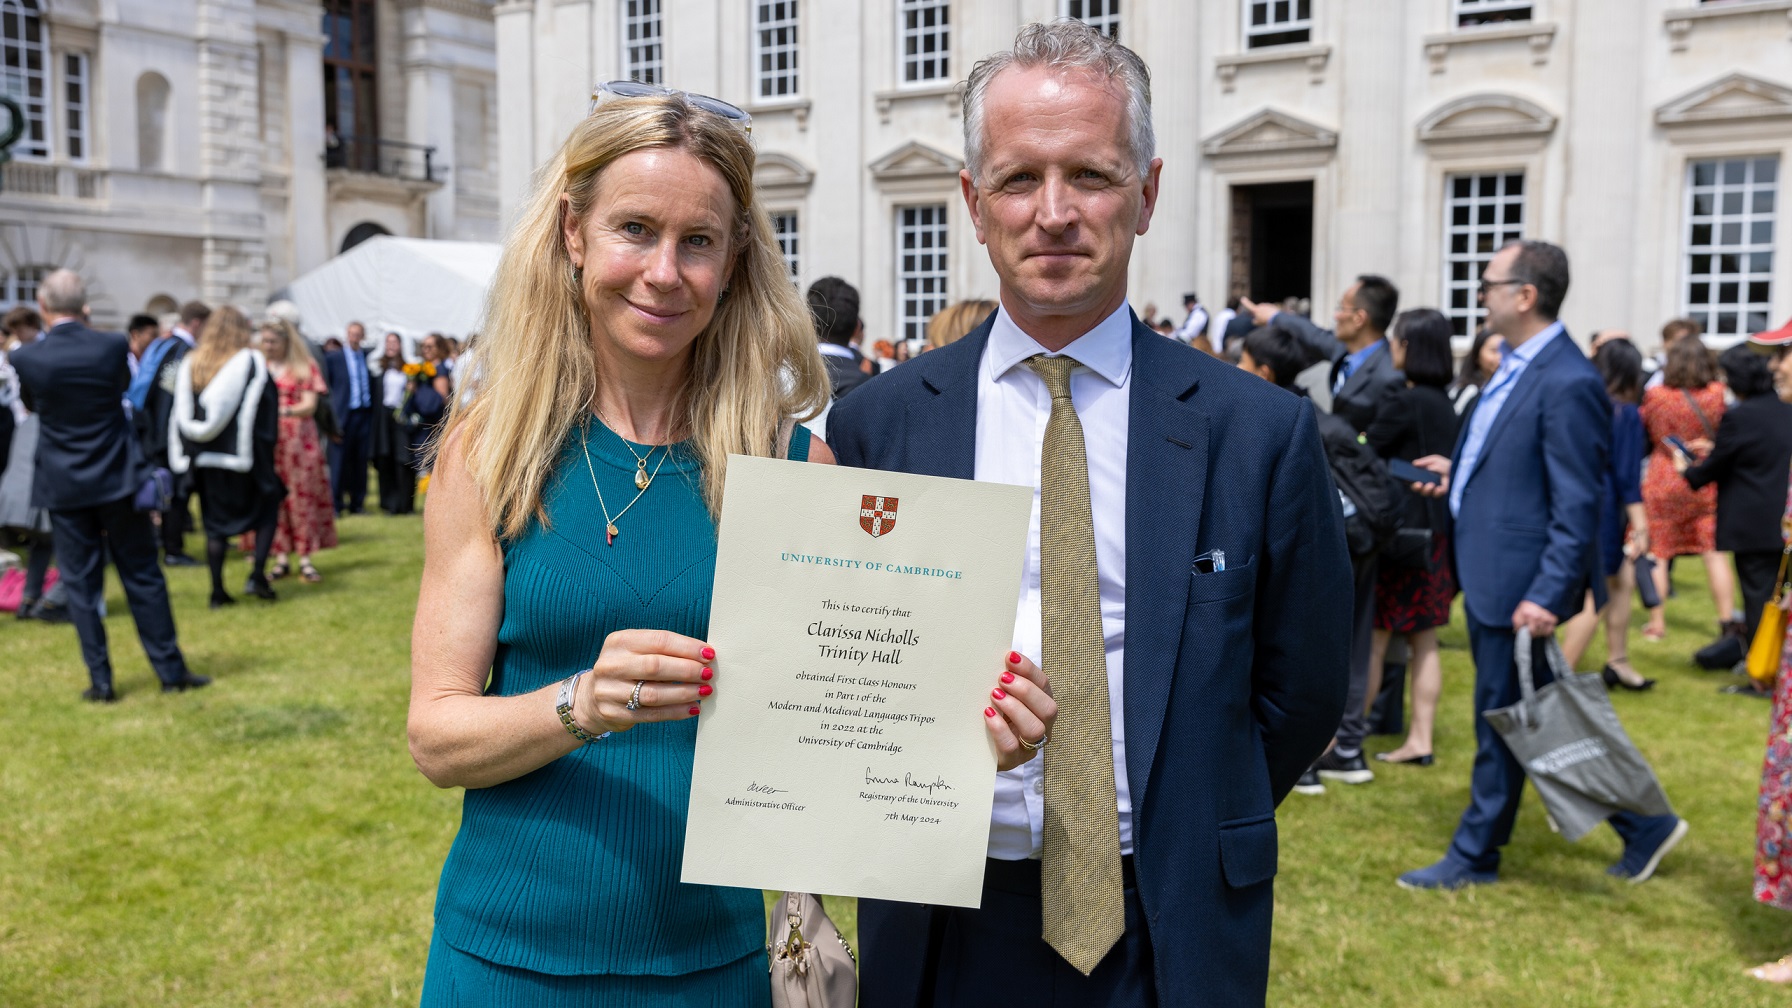 Famliy of Clarissa Nicholls collect her certificate